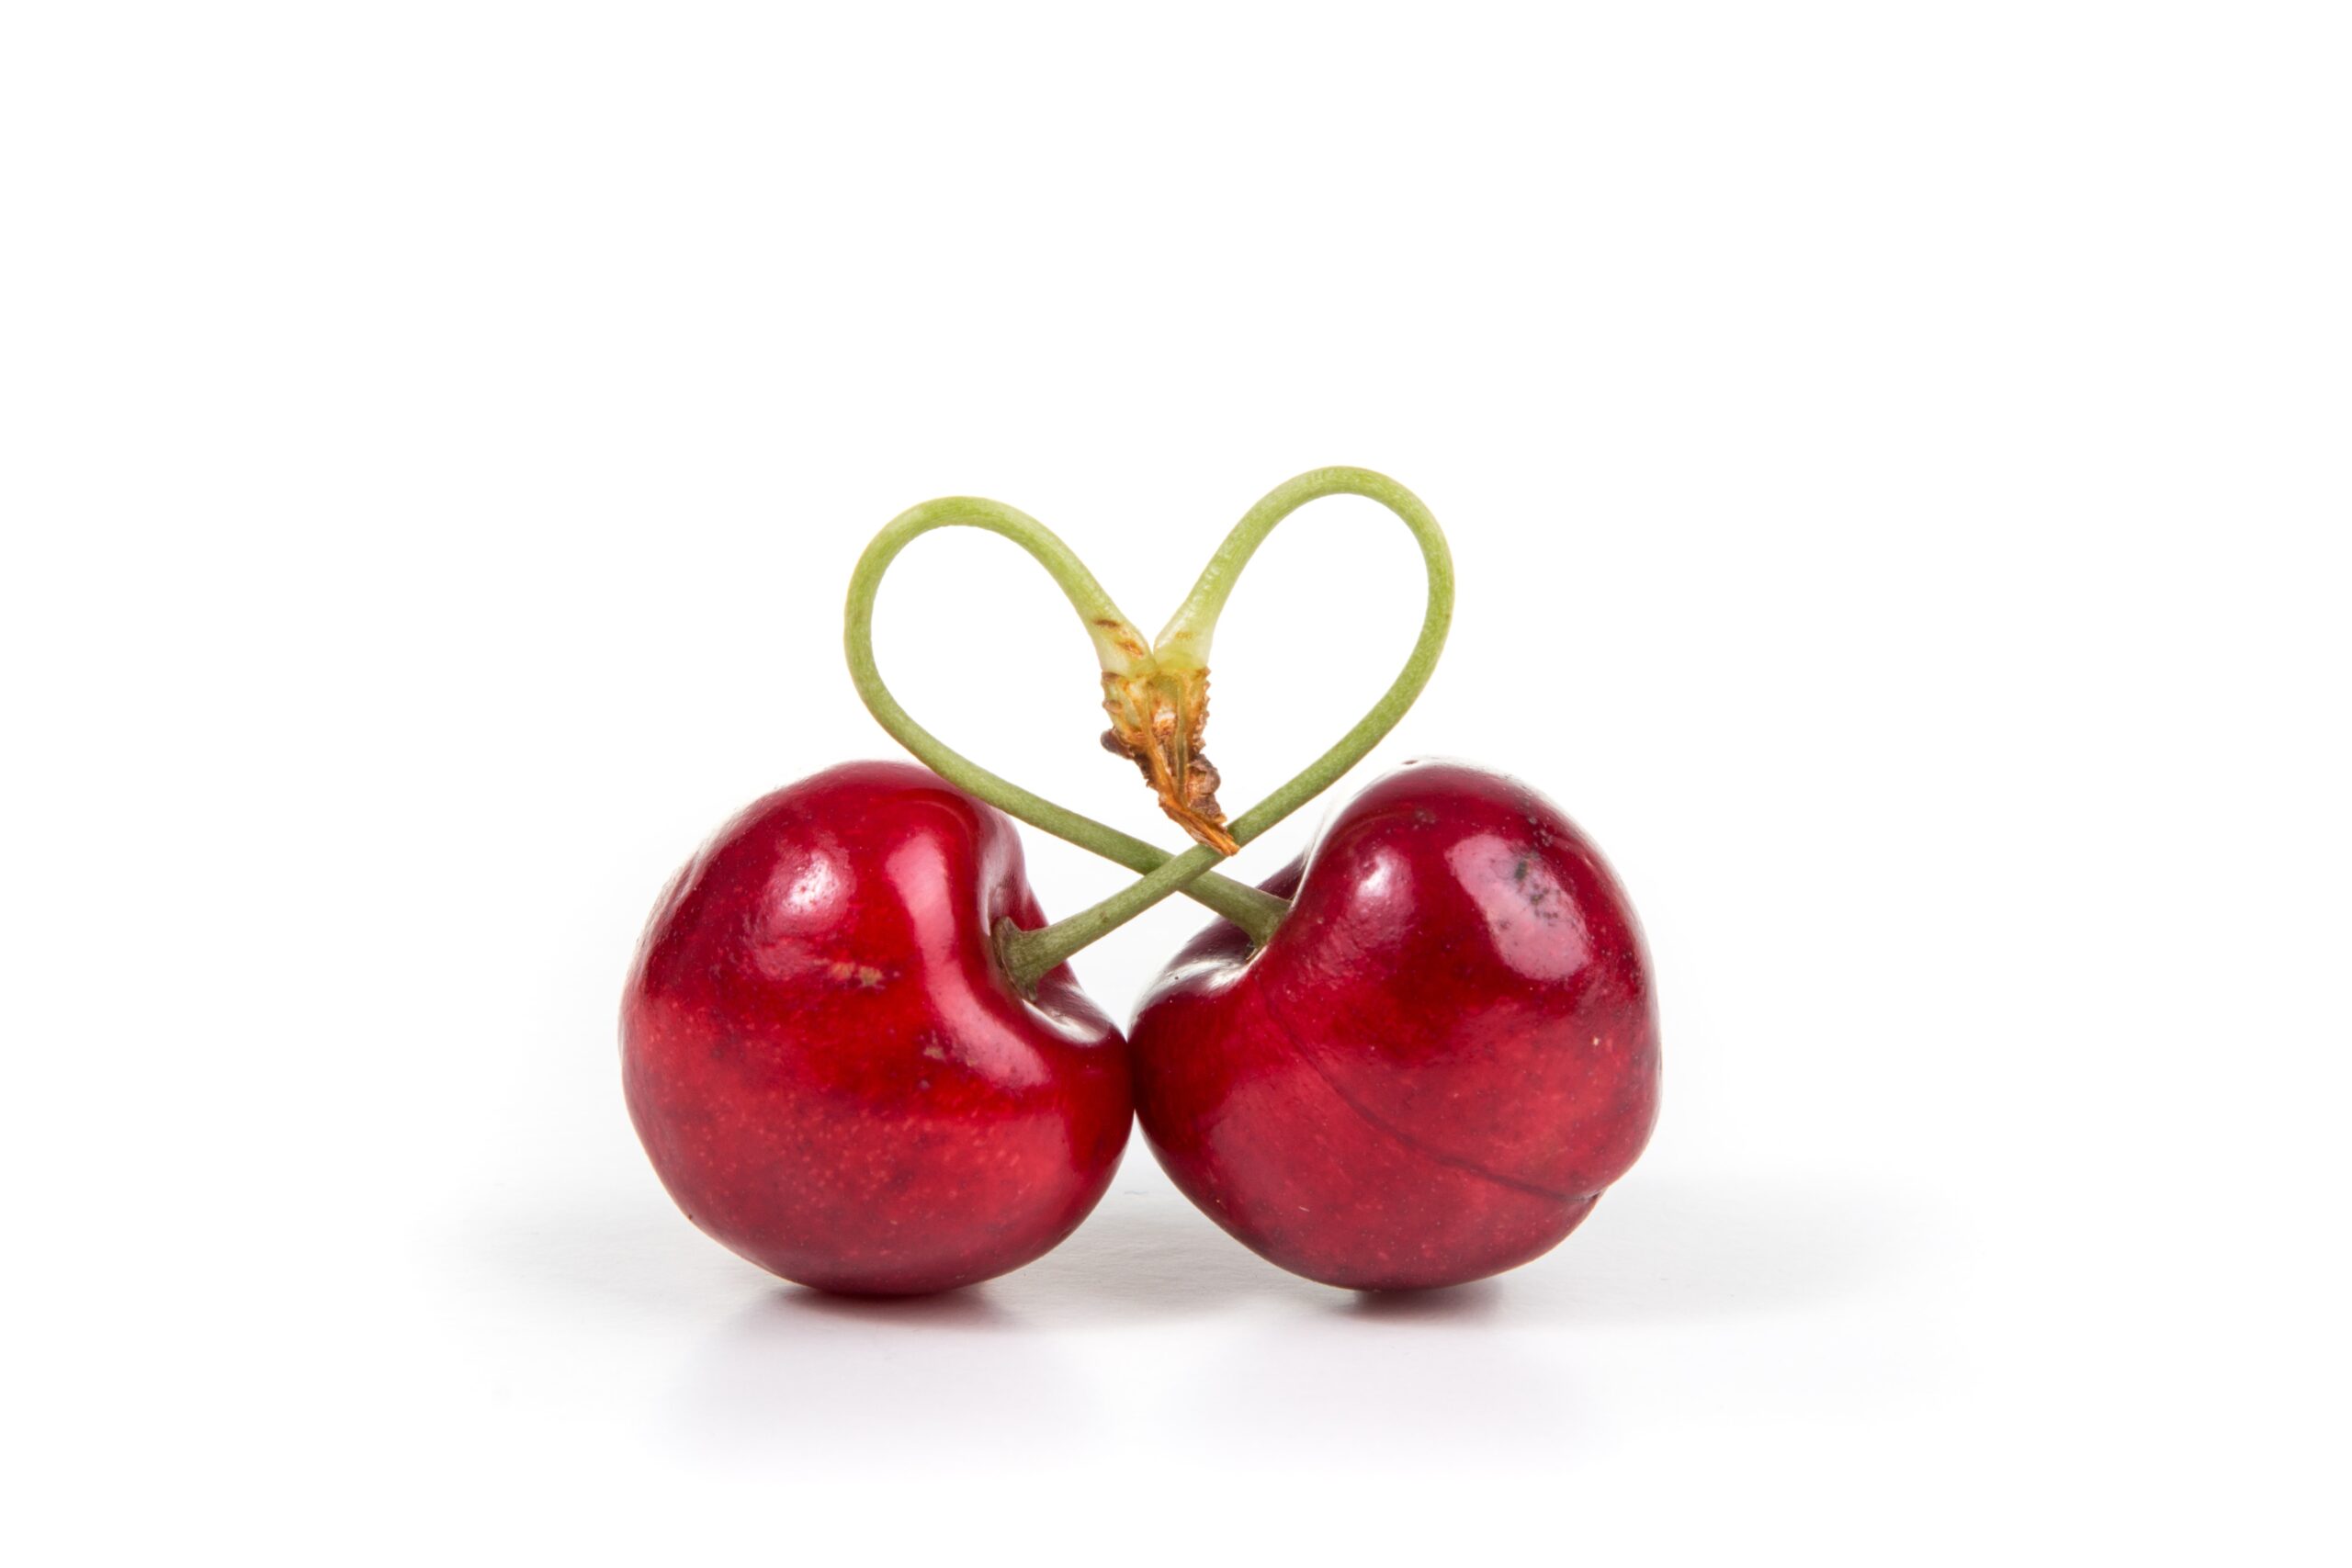 「果物の健康効果」の科学的根拠